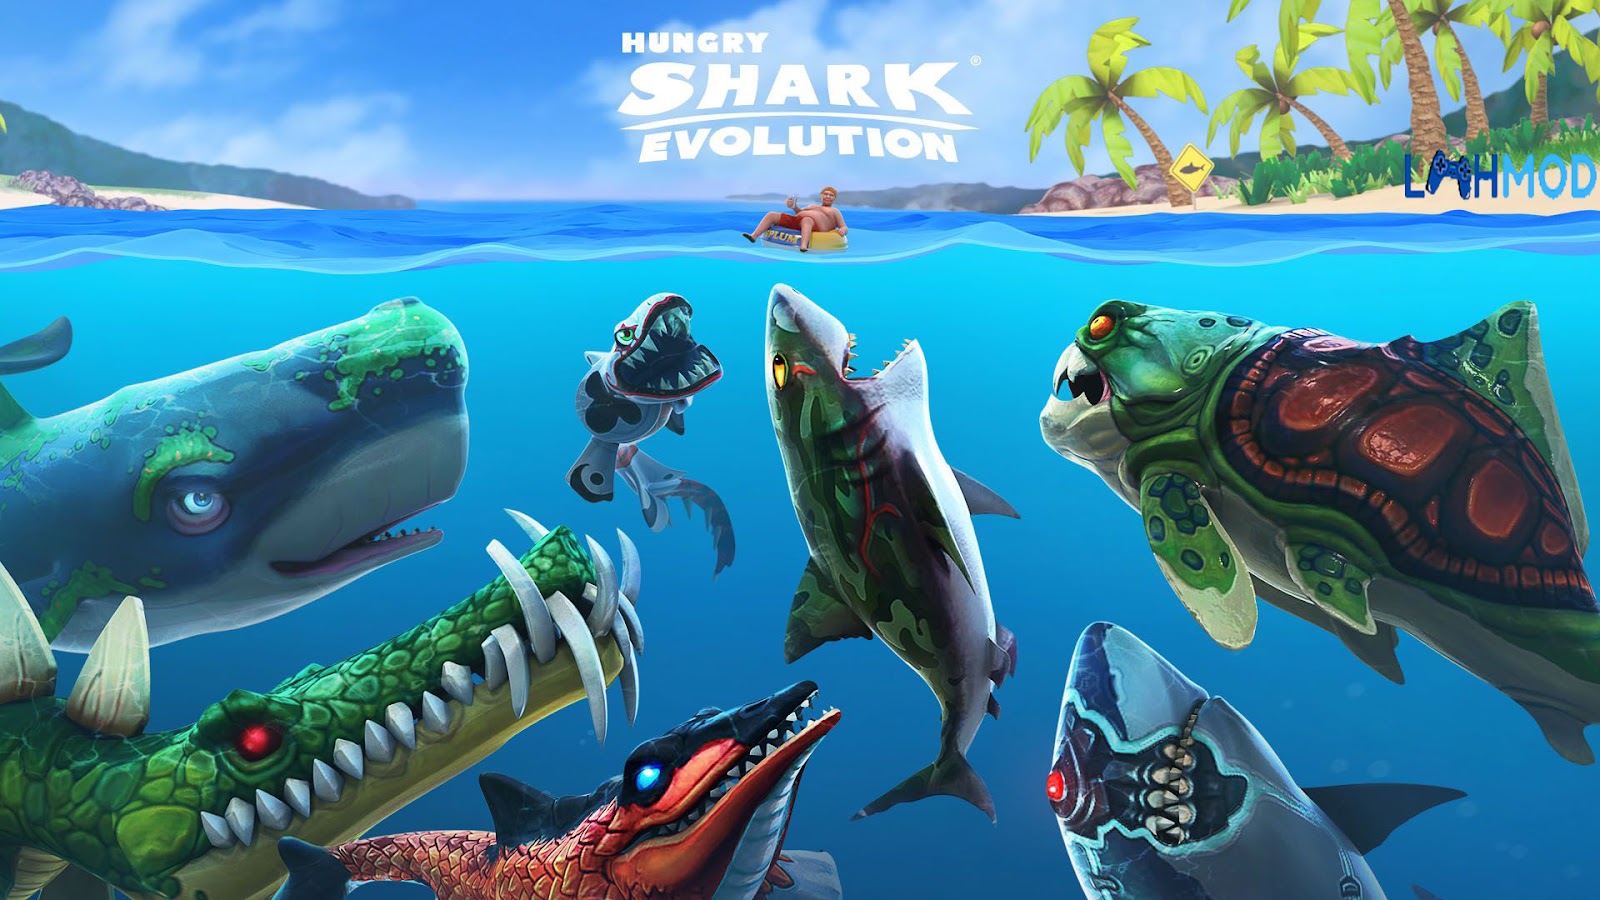 tro-thanh-chua-te-dai-duong-voi-game-hungry-shark-evolution-2